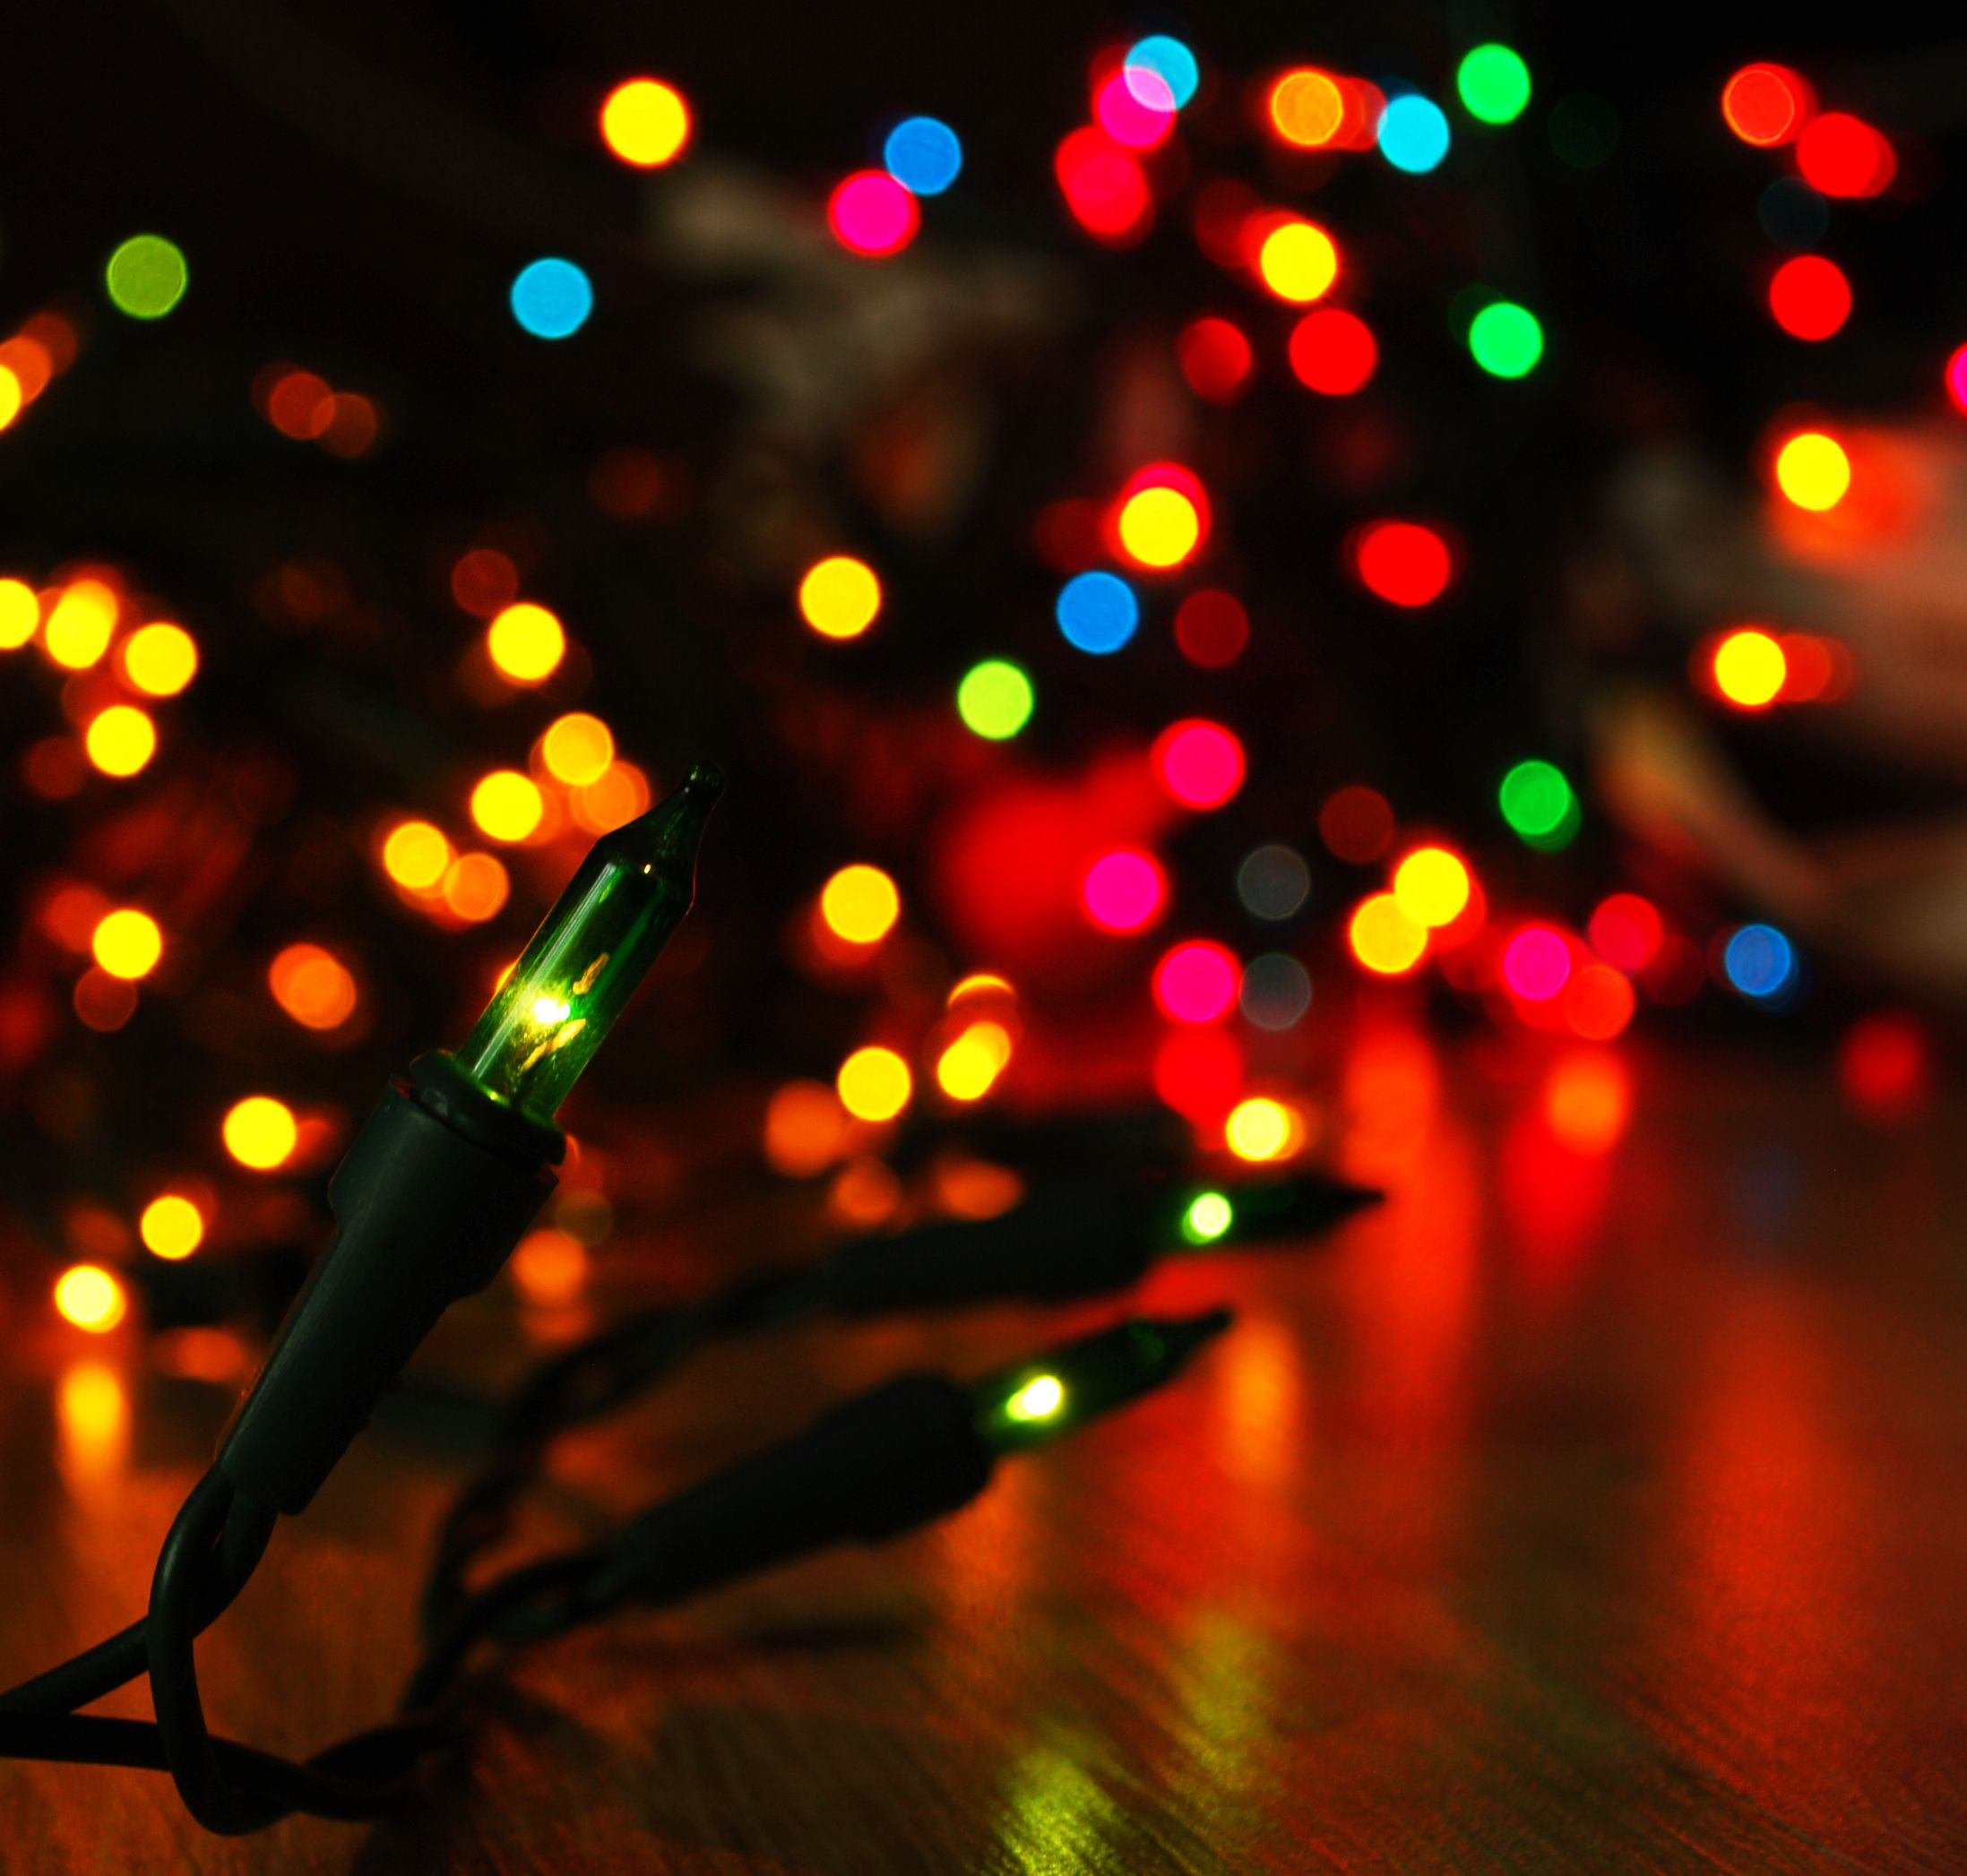 Lights Background. Christmas Lights Wallpaper, Northern Lights Wallpaper and Holiday Lights Wallpaper